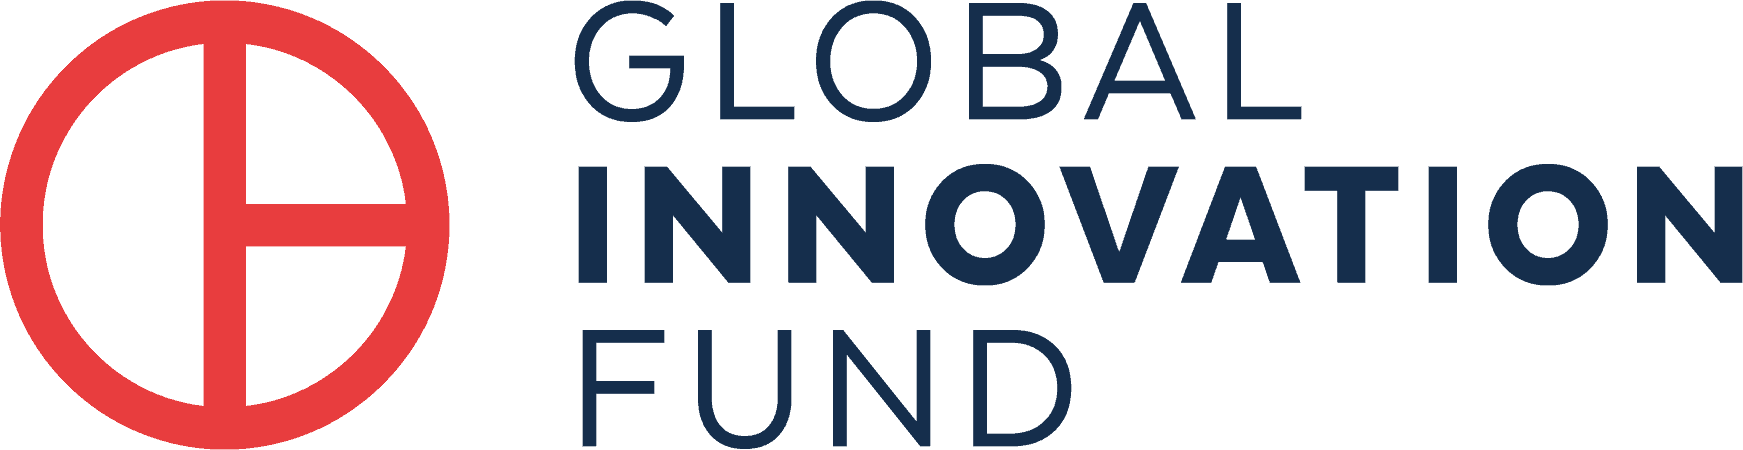 Global innovation fund